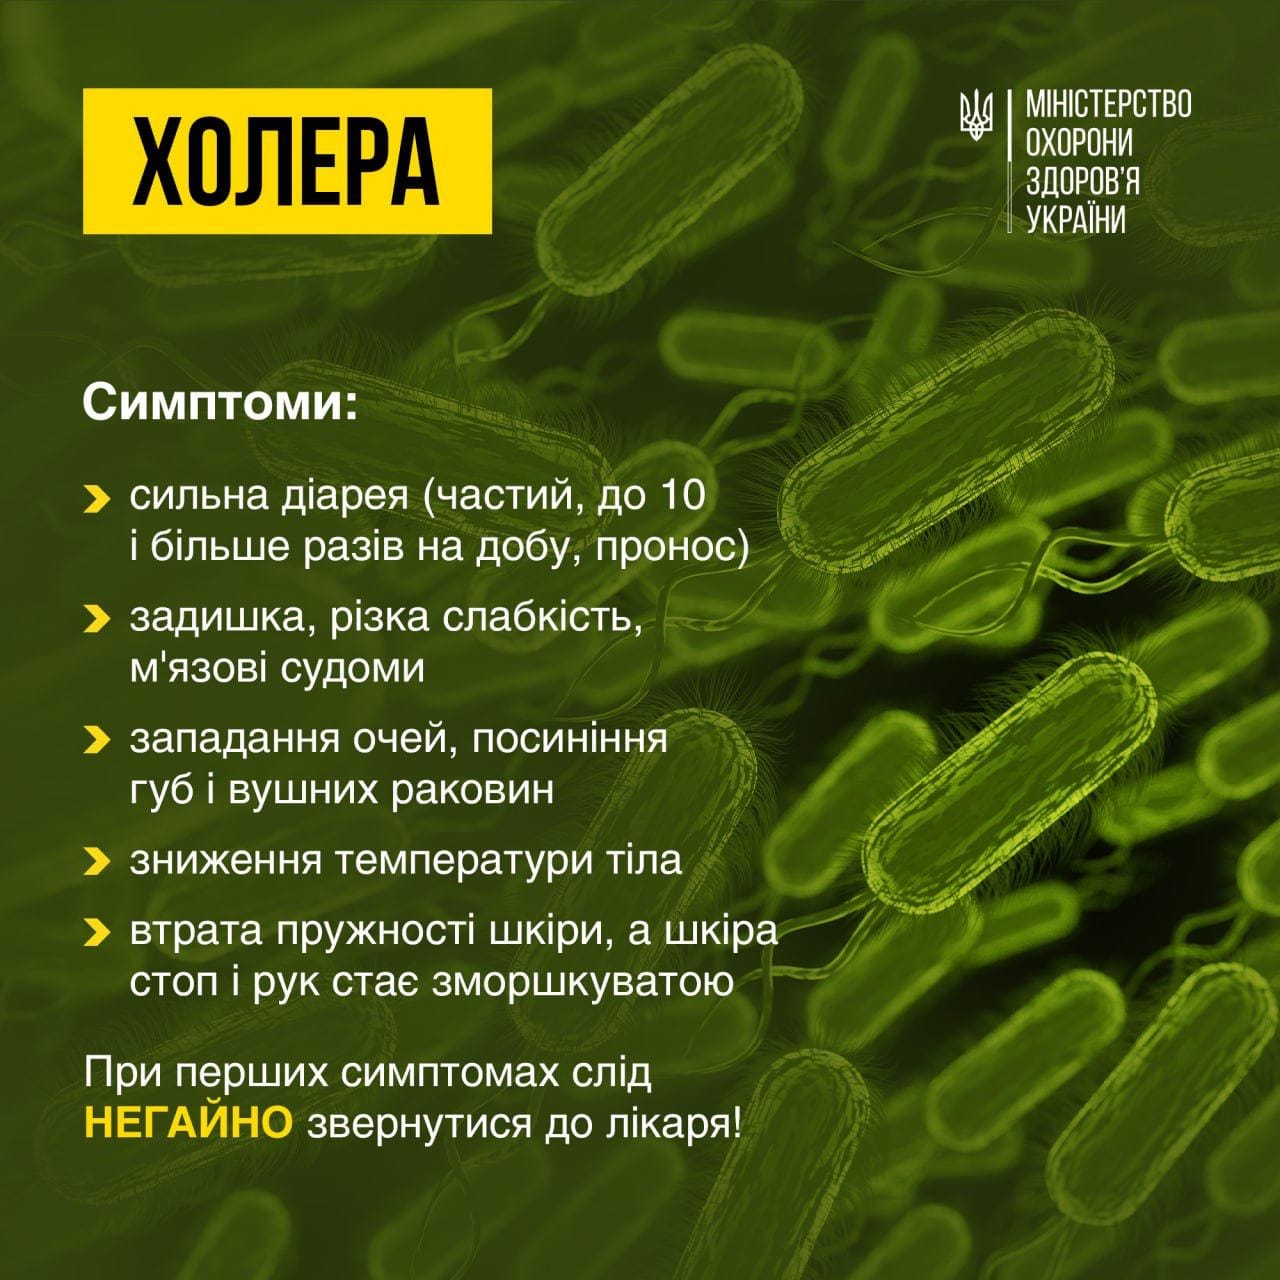 Постер МОЗ - Симптоми холери.